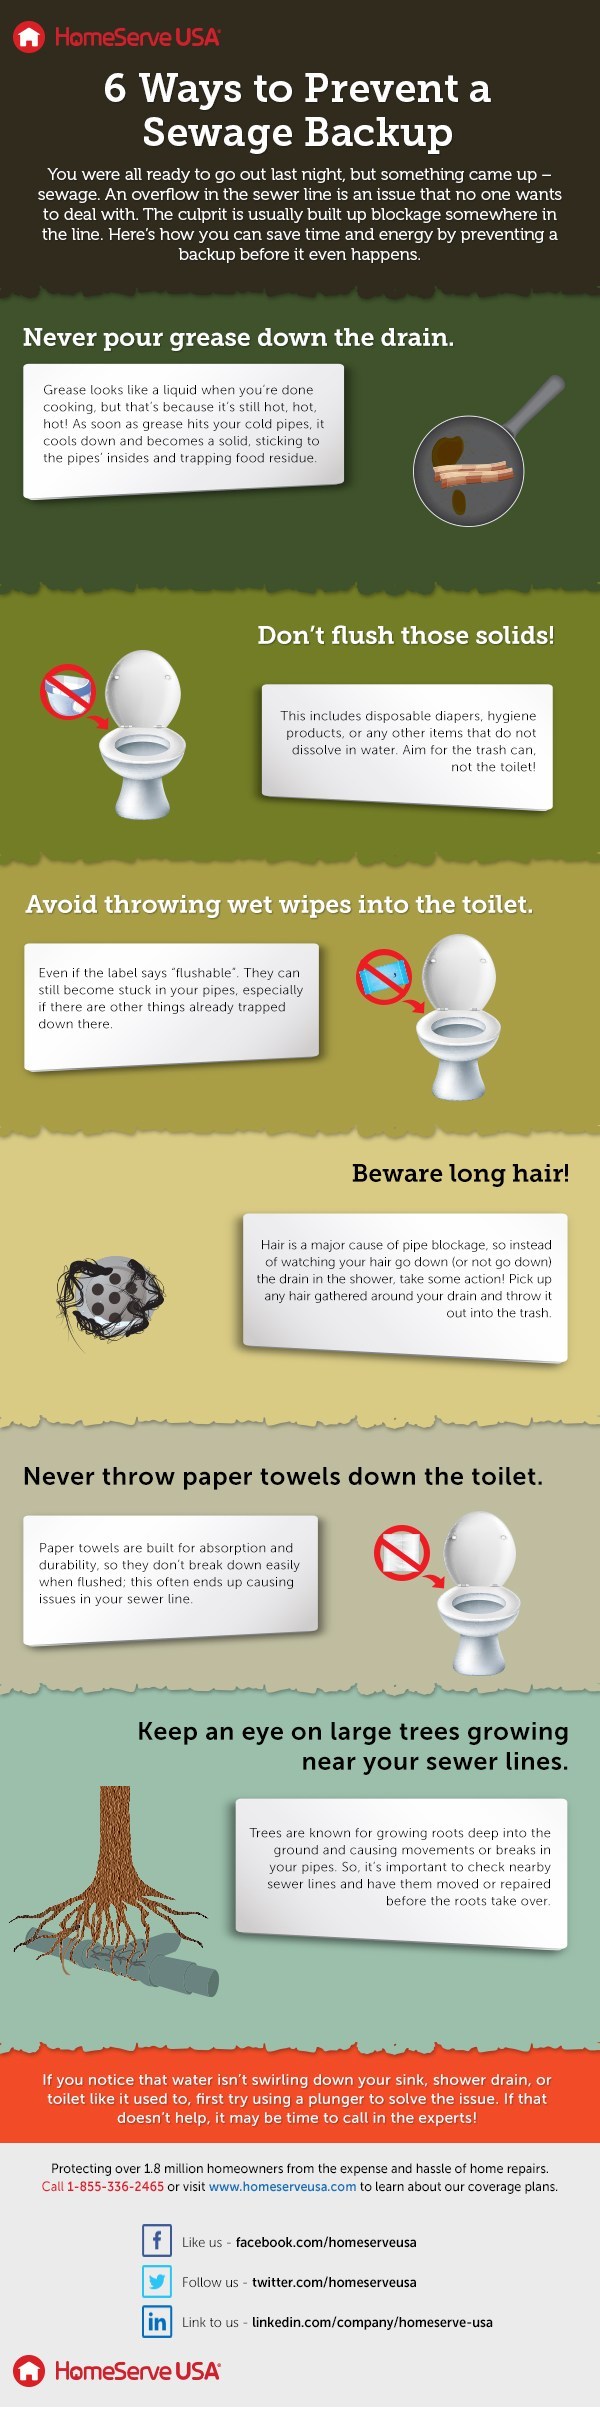 Sewage Backup Prevention Tips!